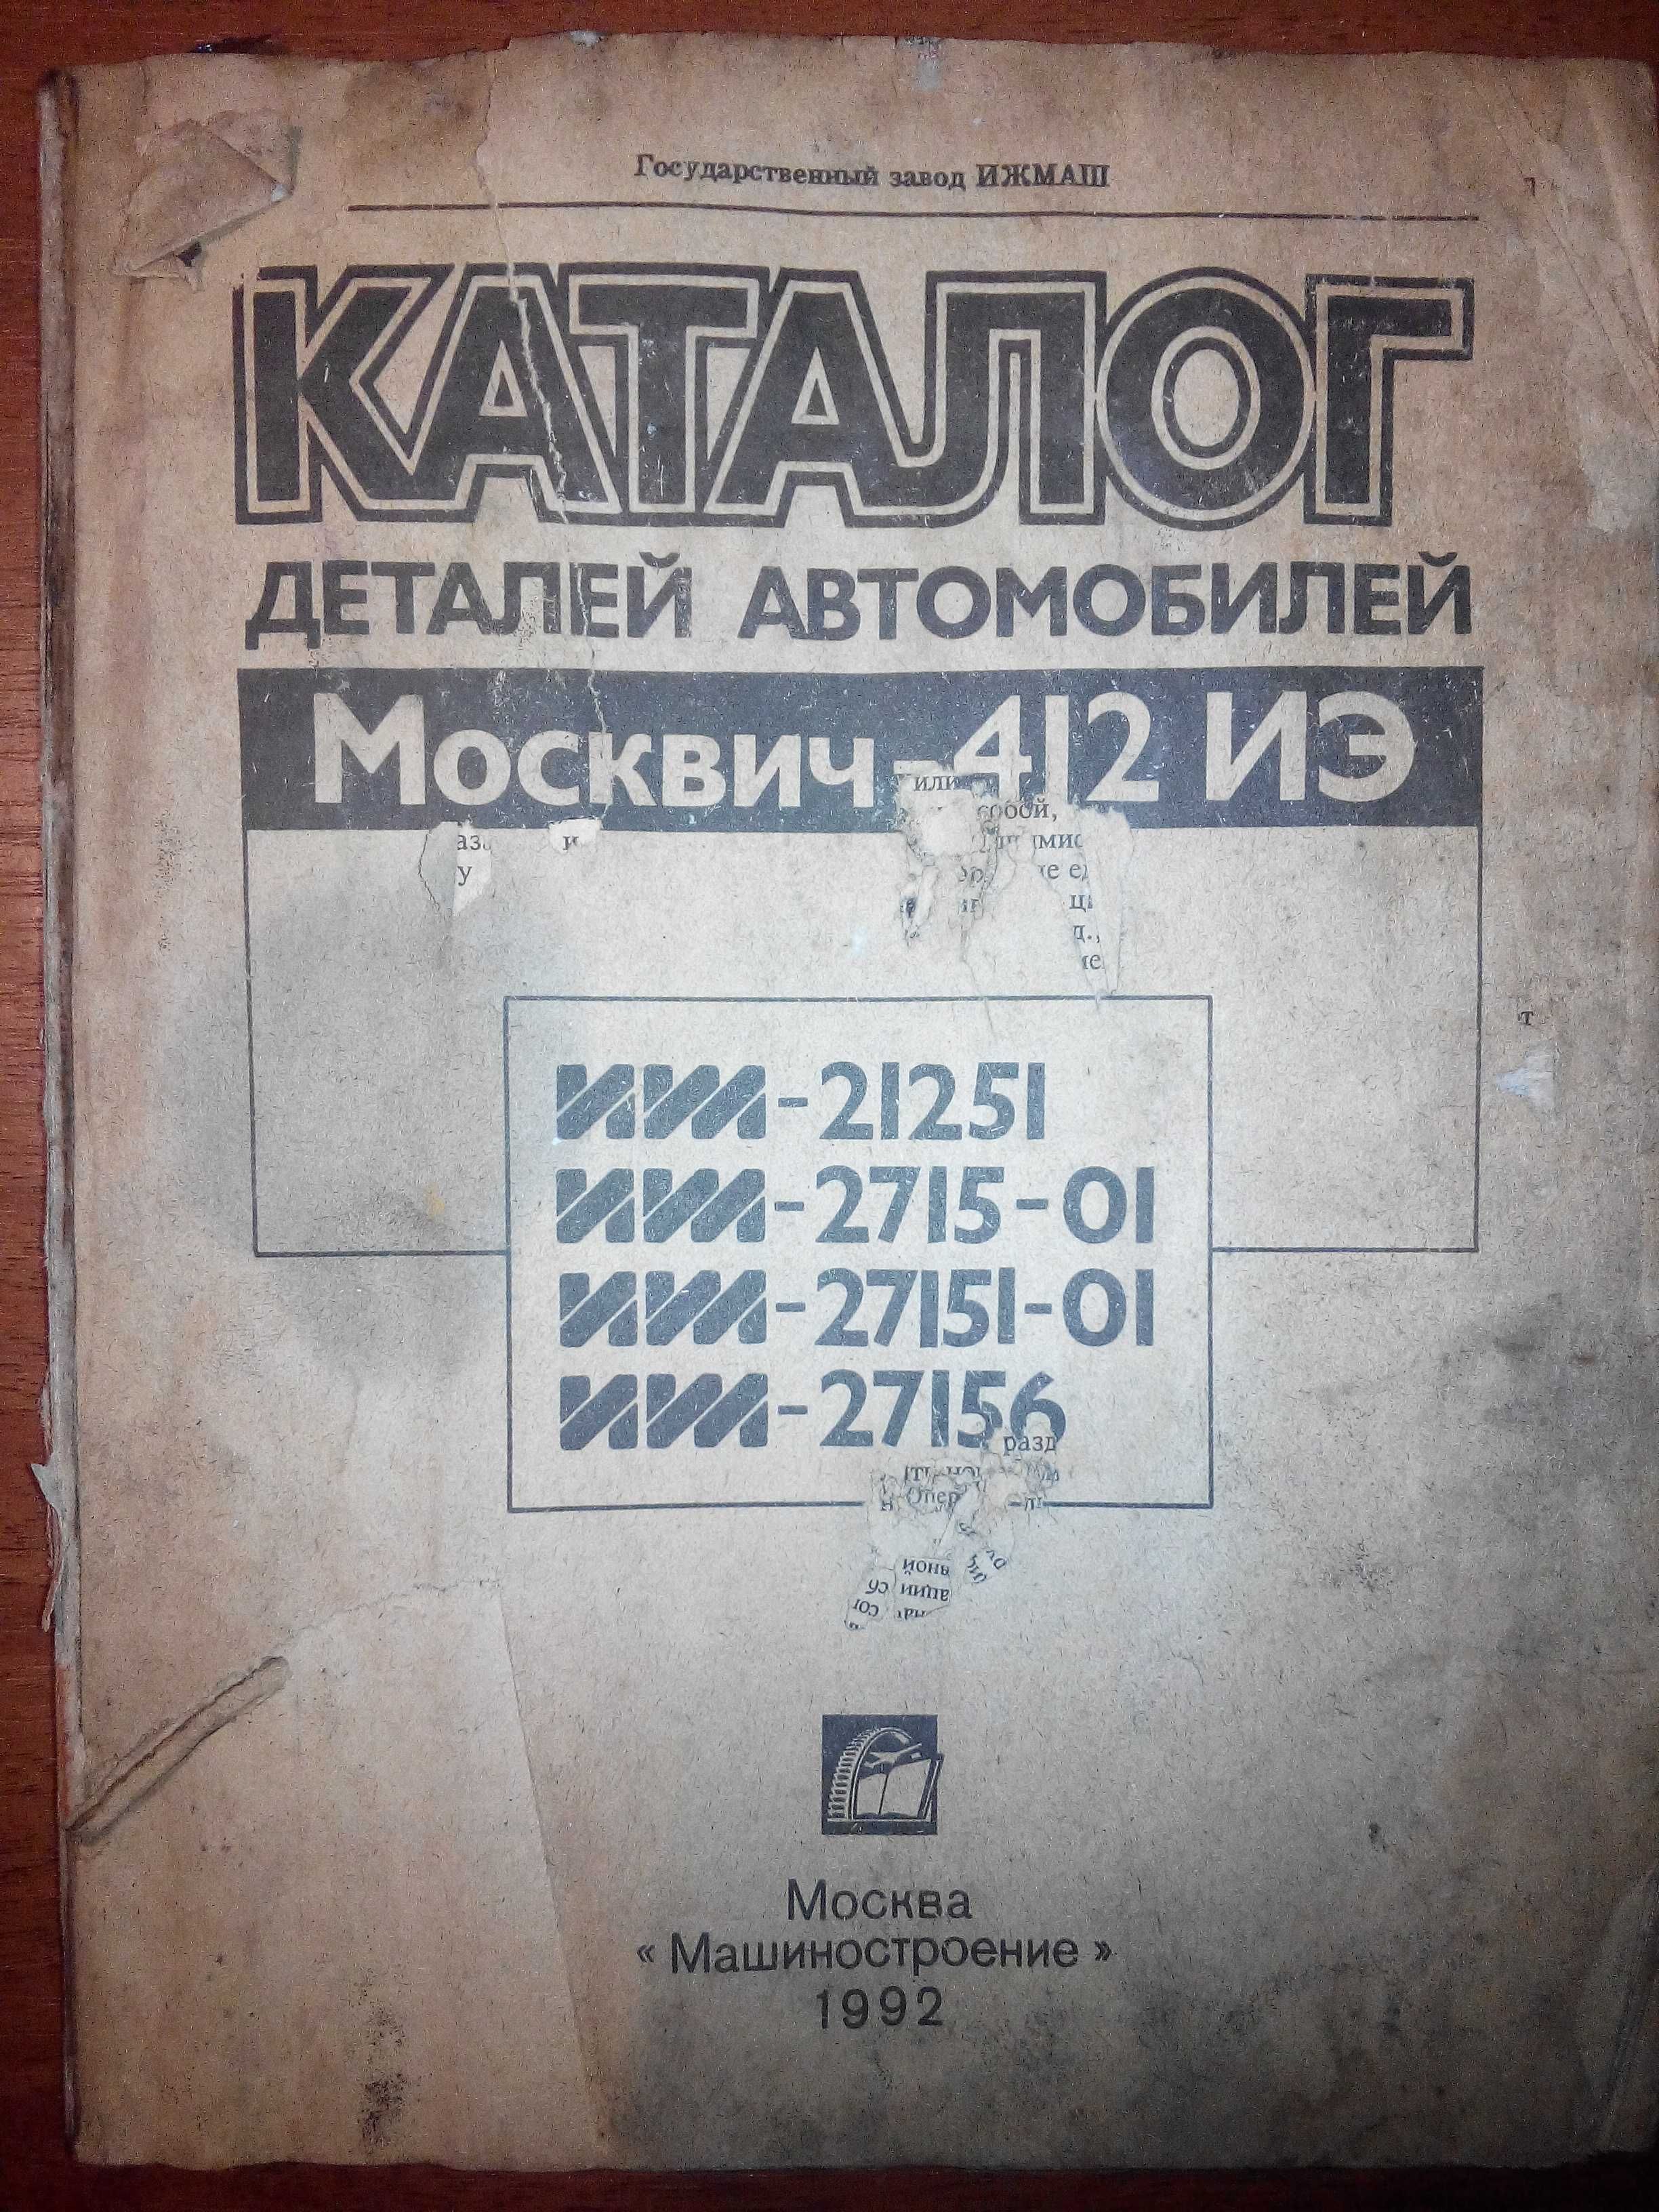 Москвич 408-2140: молдинг и прочее по кузову, агрегатам и салону